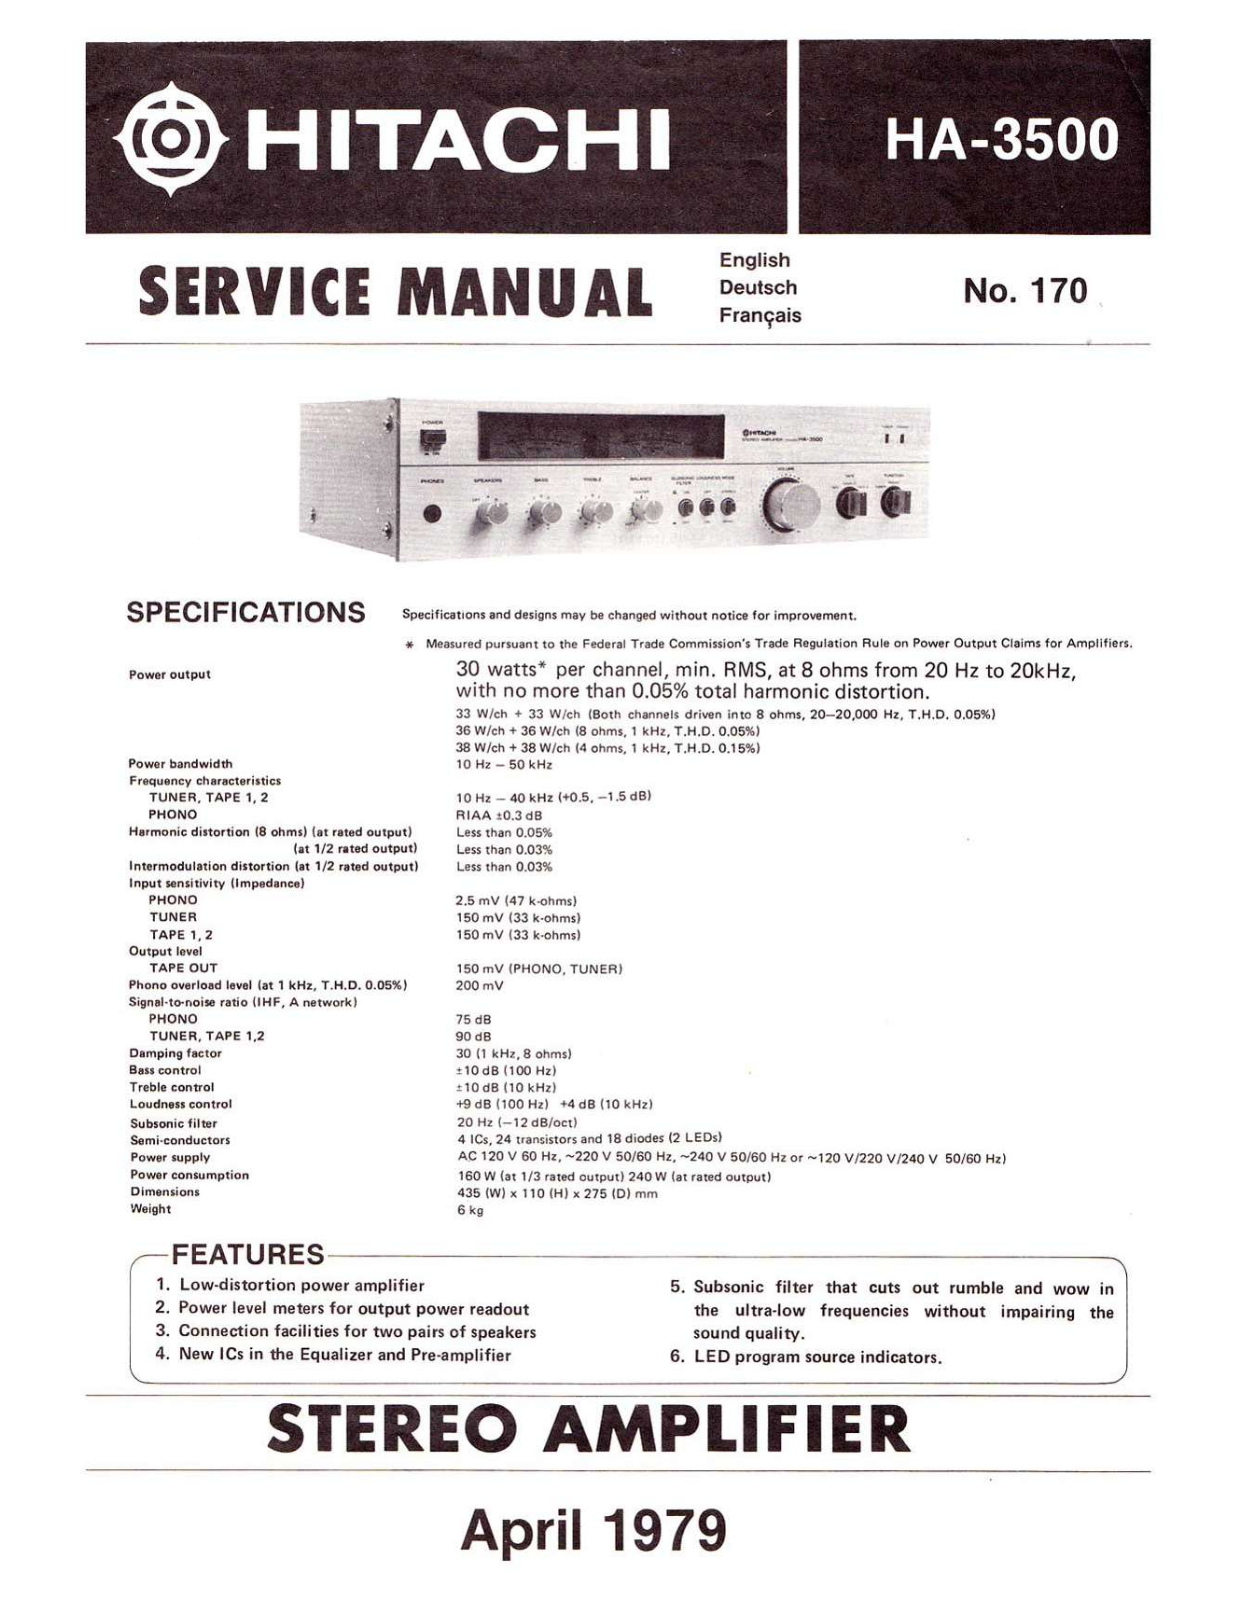 Hitachi HA-3500 Service manual